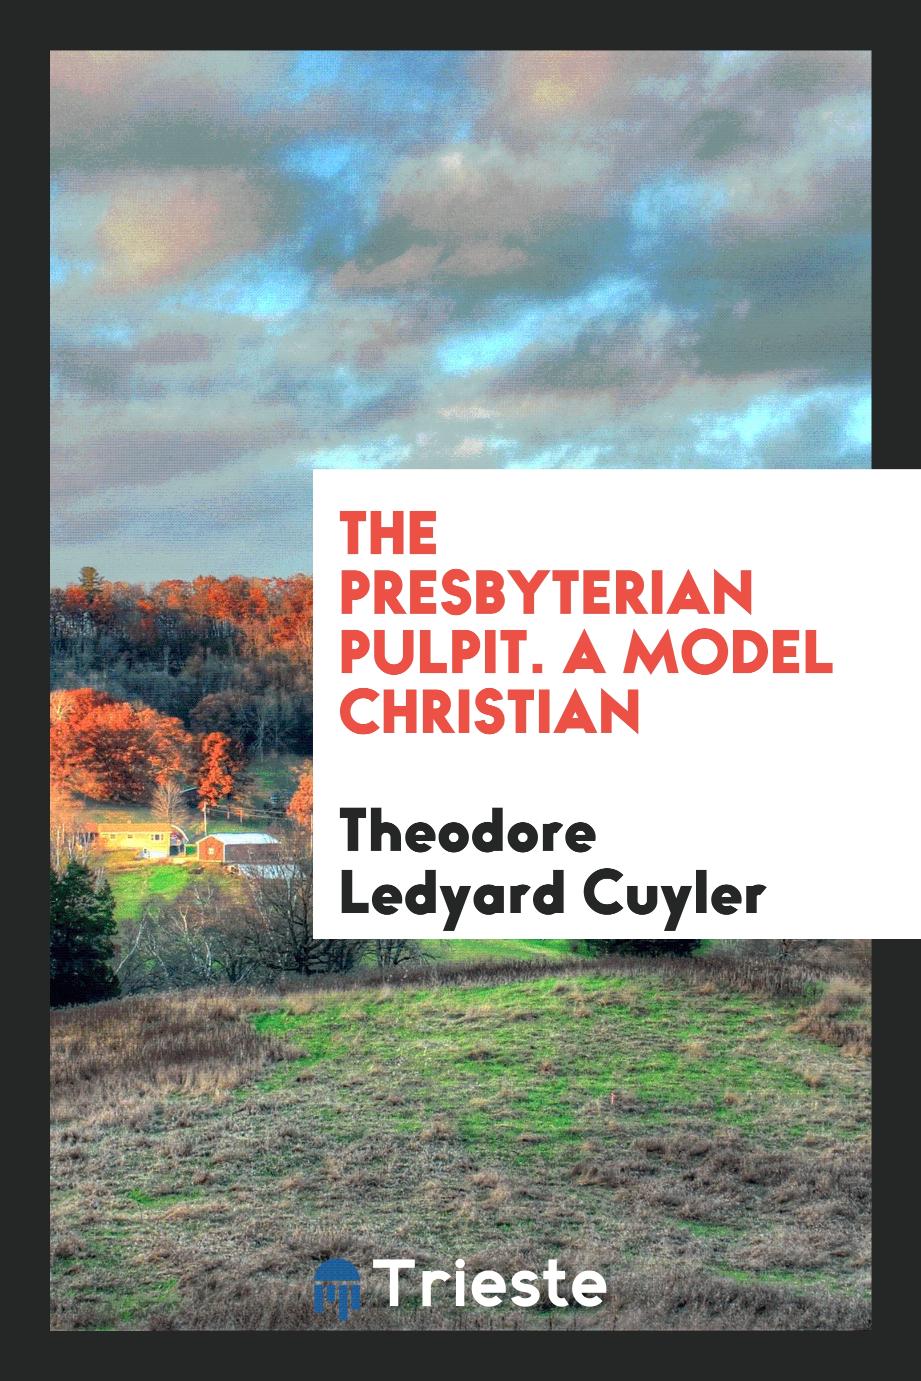 The presbyterian pulpit. A model Christian